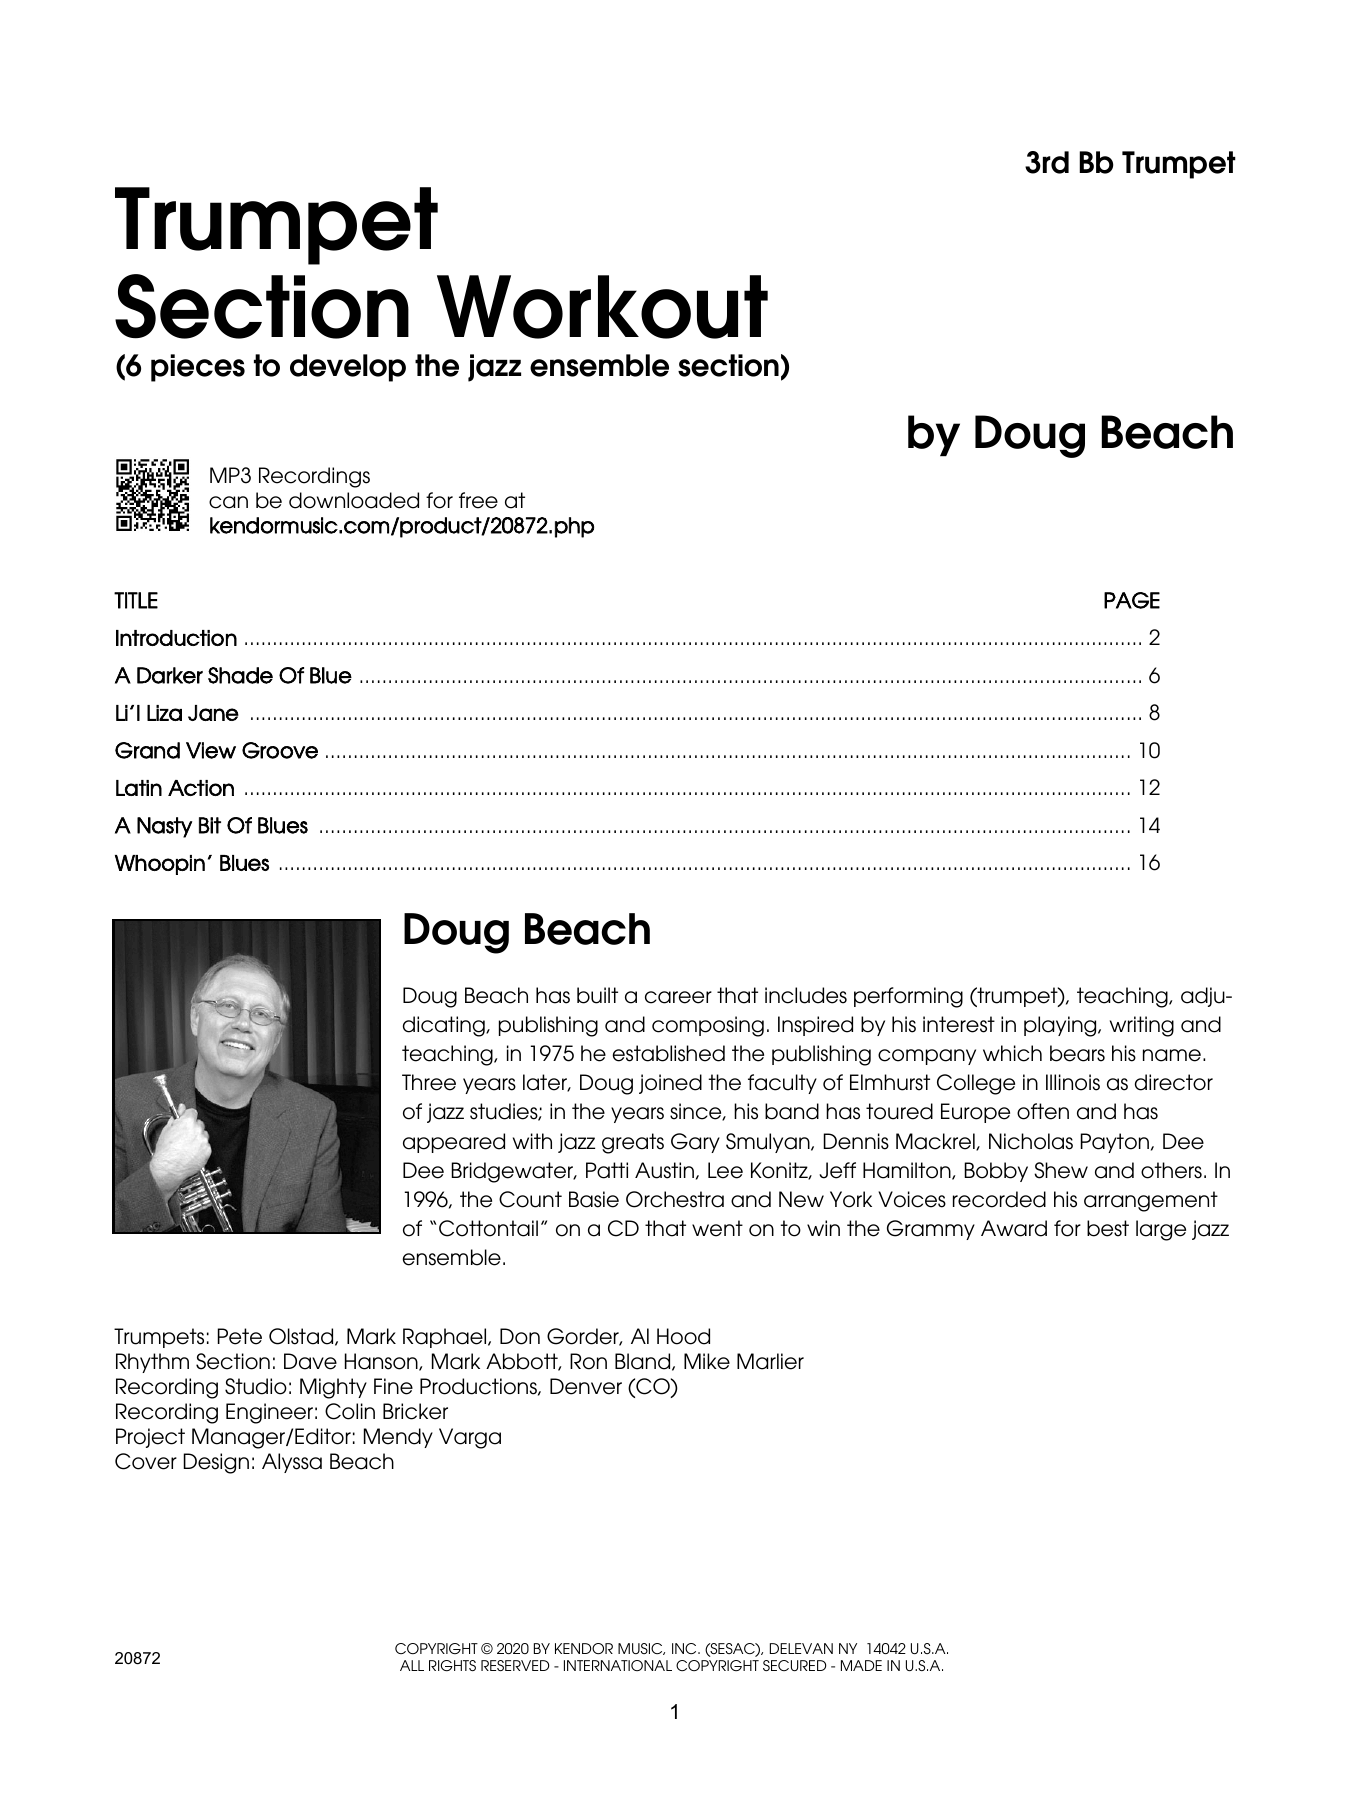 Trumpet Section Workout with MP3's (6 pieces to develop the jazz ensemble section) - 3rd Bb Trumpet (Brass Ensemble) von Doug Beach